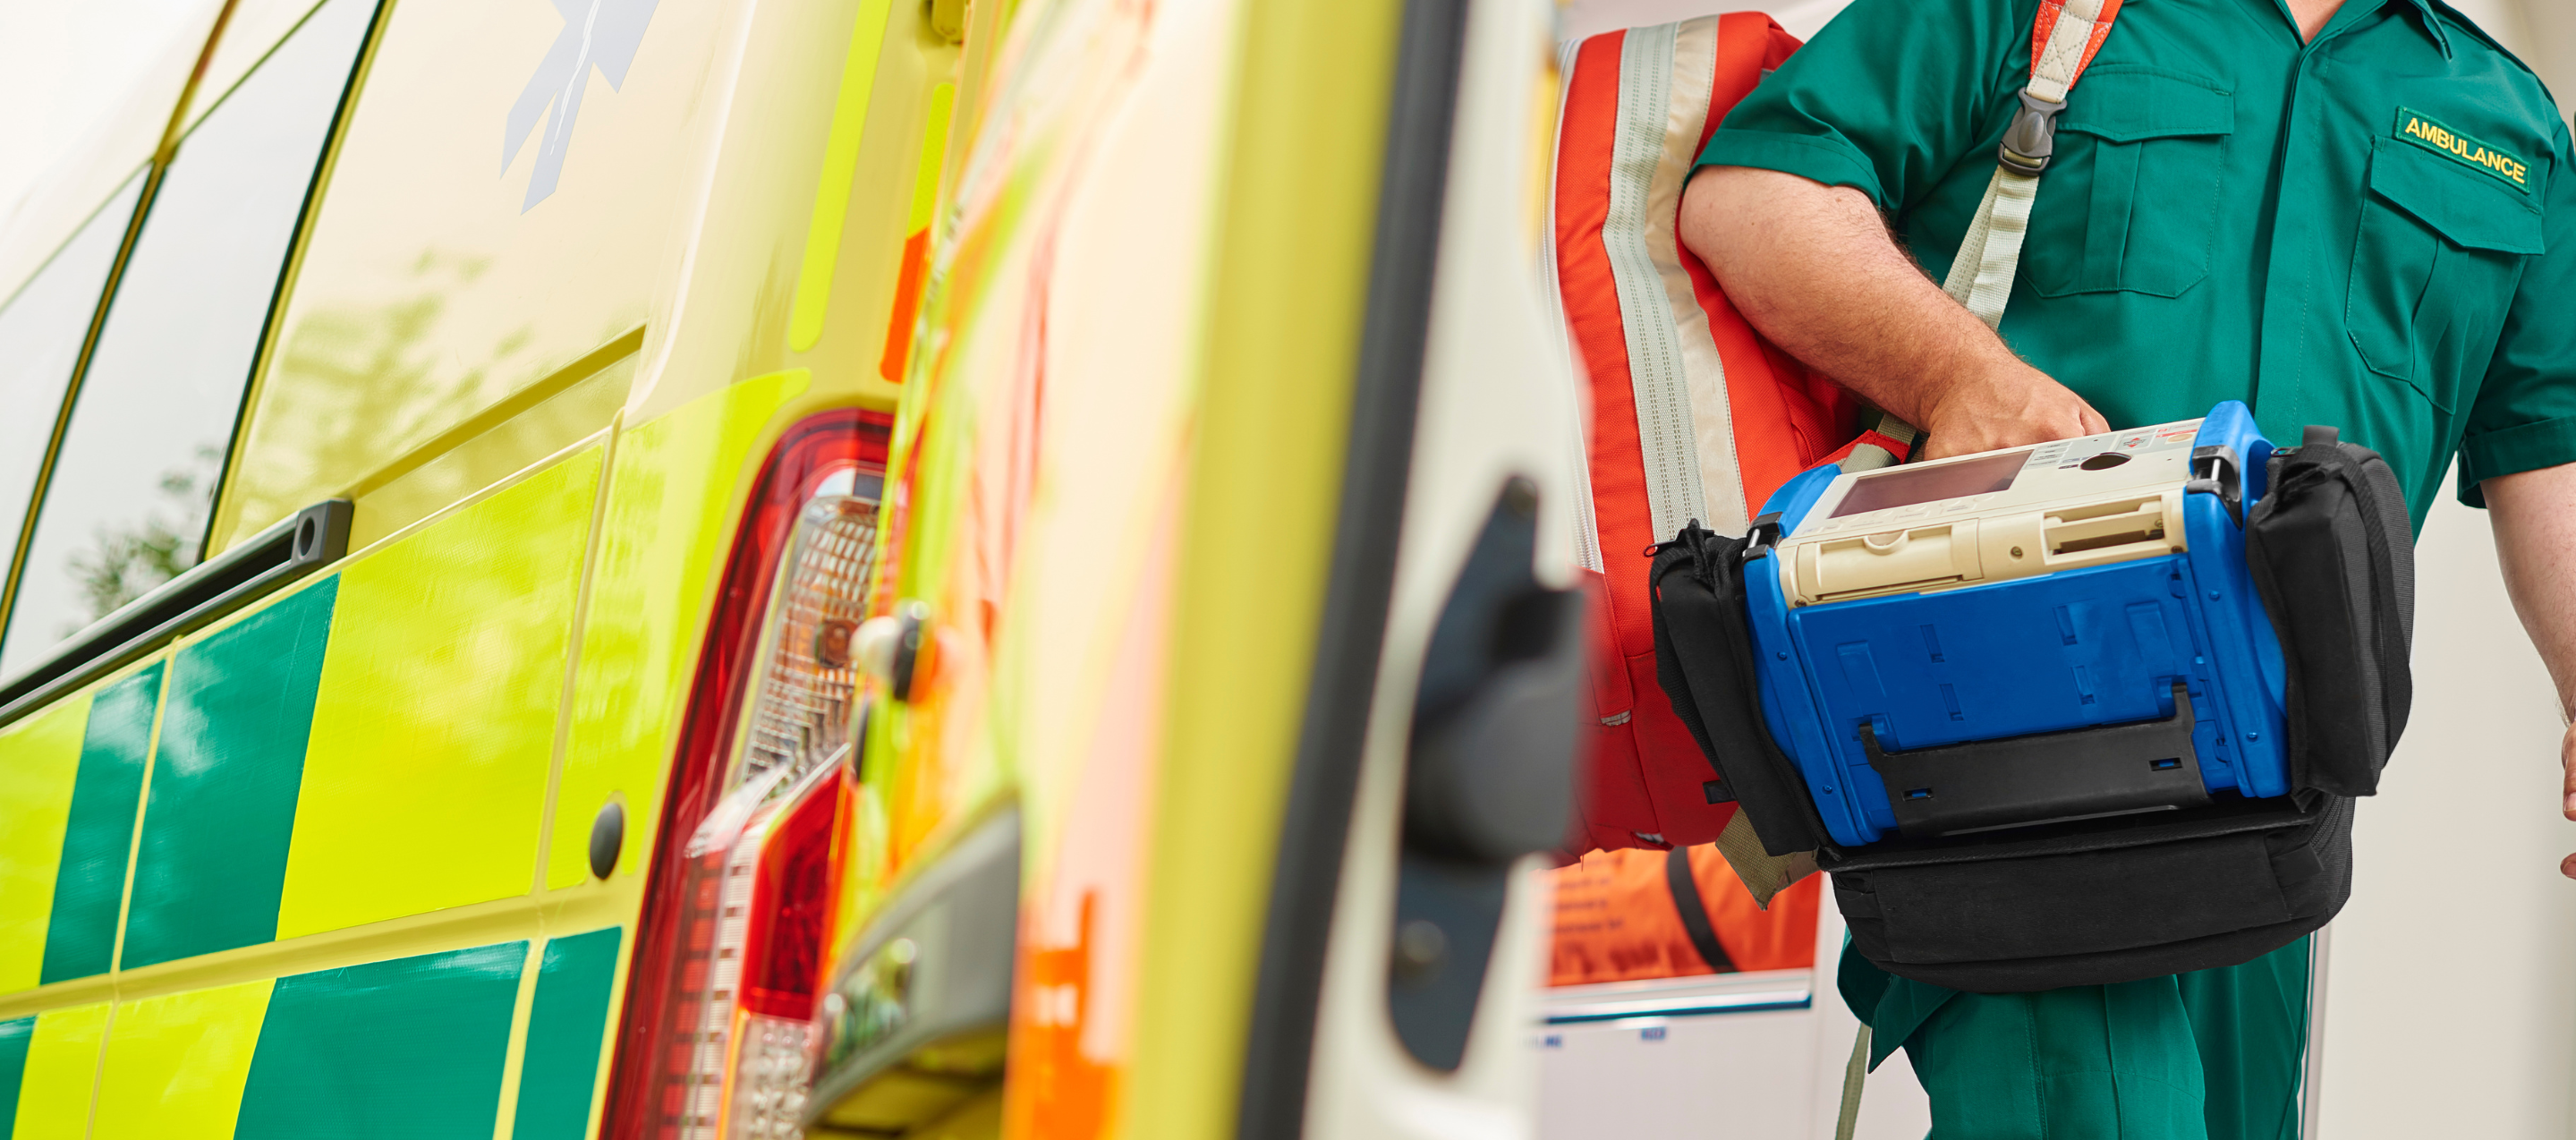 A male paramedic holding a defibrillator leaving an ambulance.